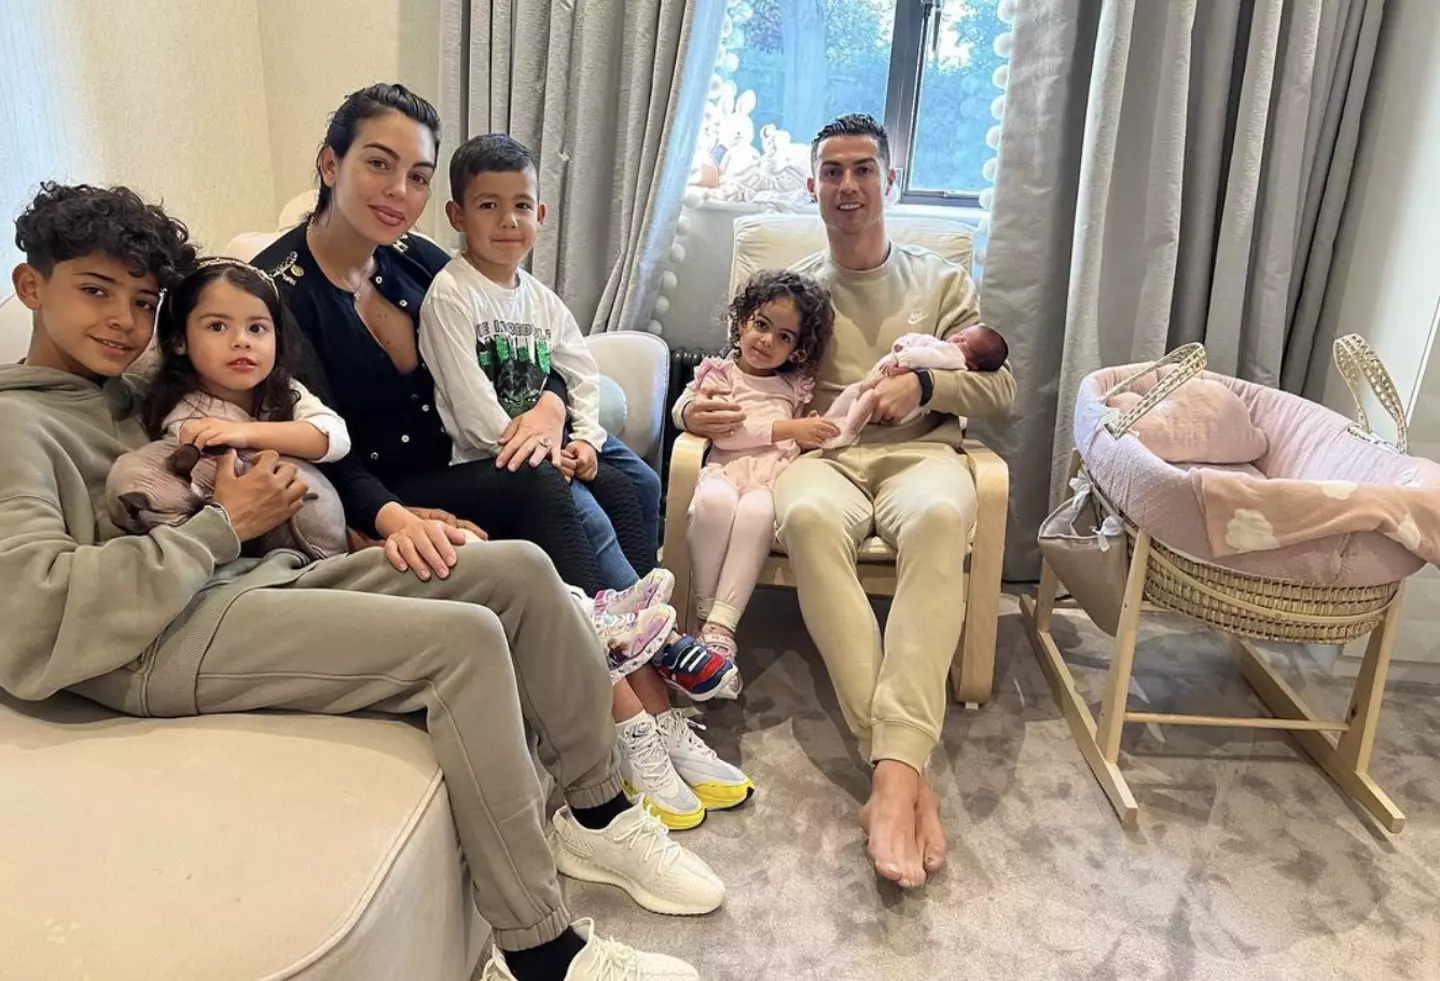 Cristiano Ronaldo and his family. (